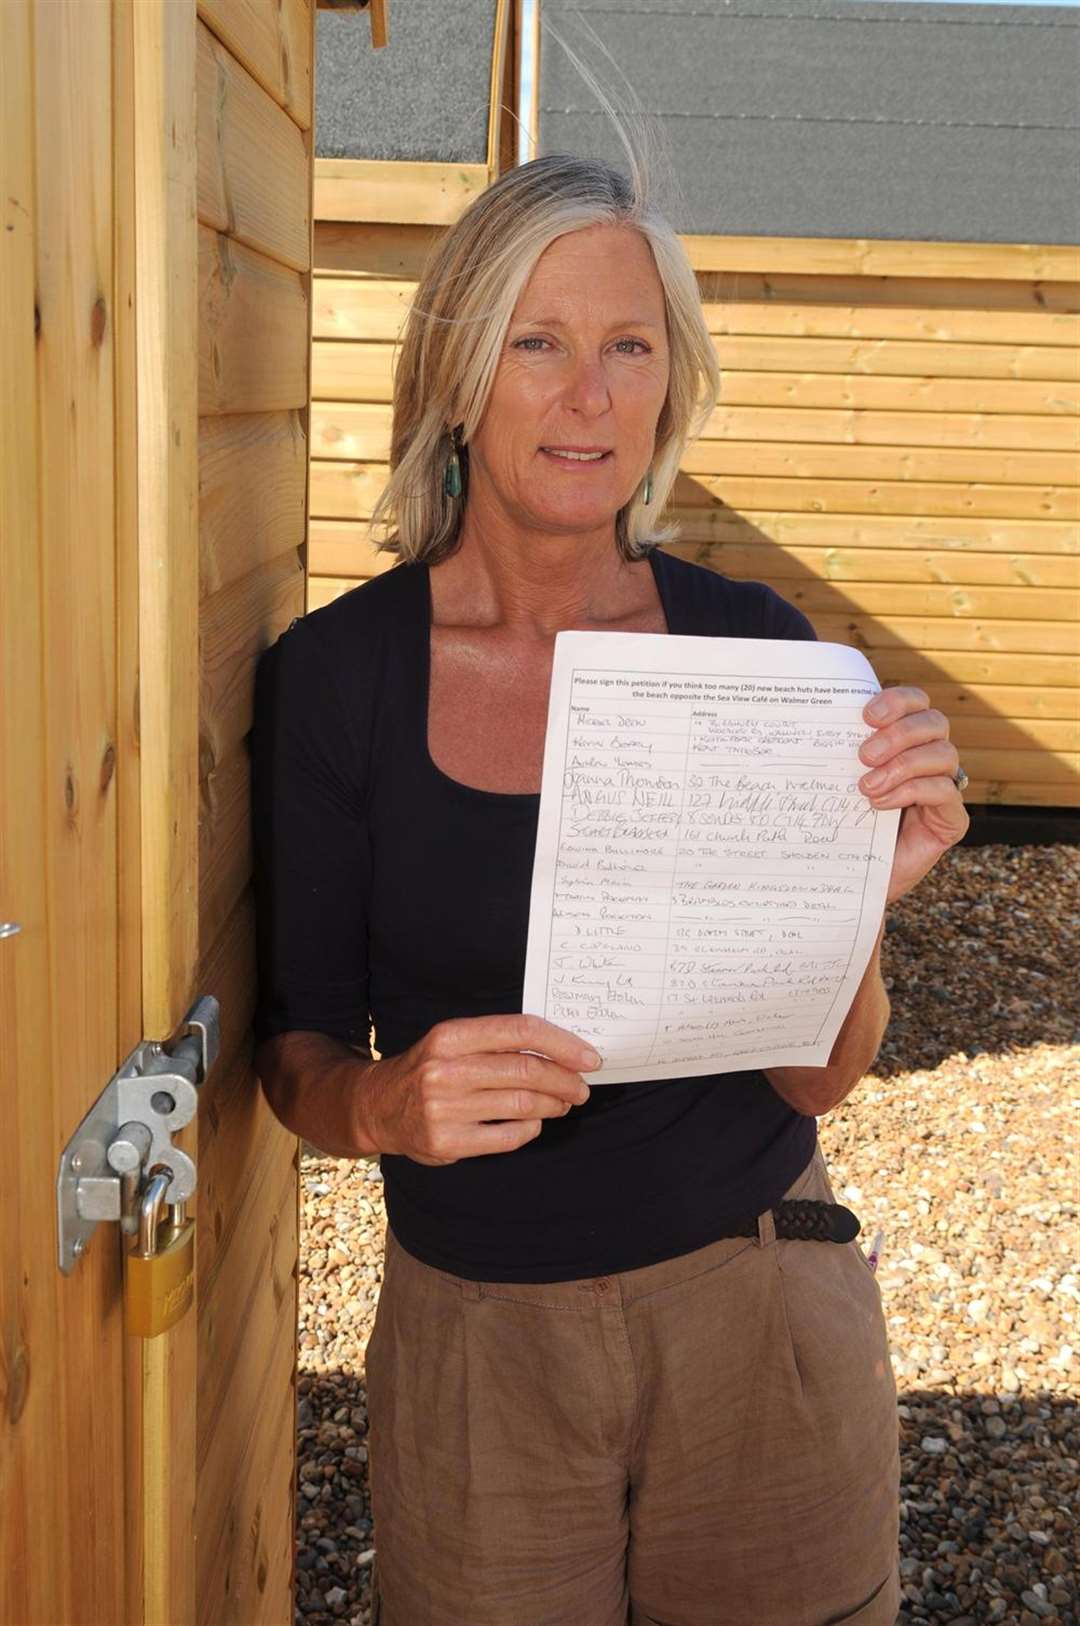 Joanna Thomson protesting against beach huts